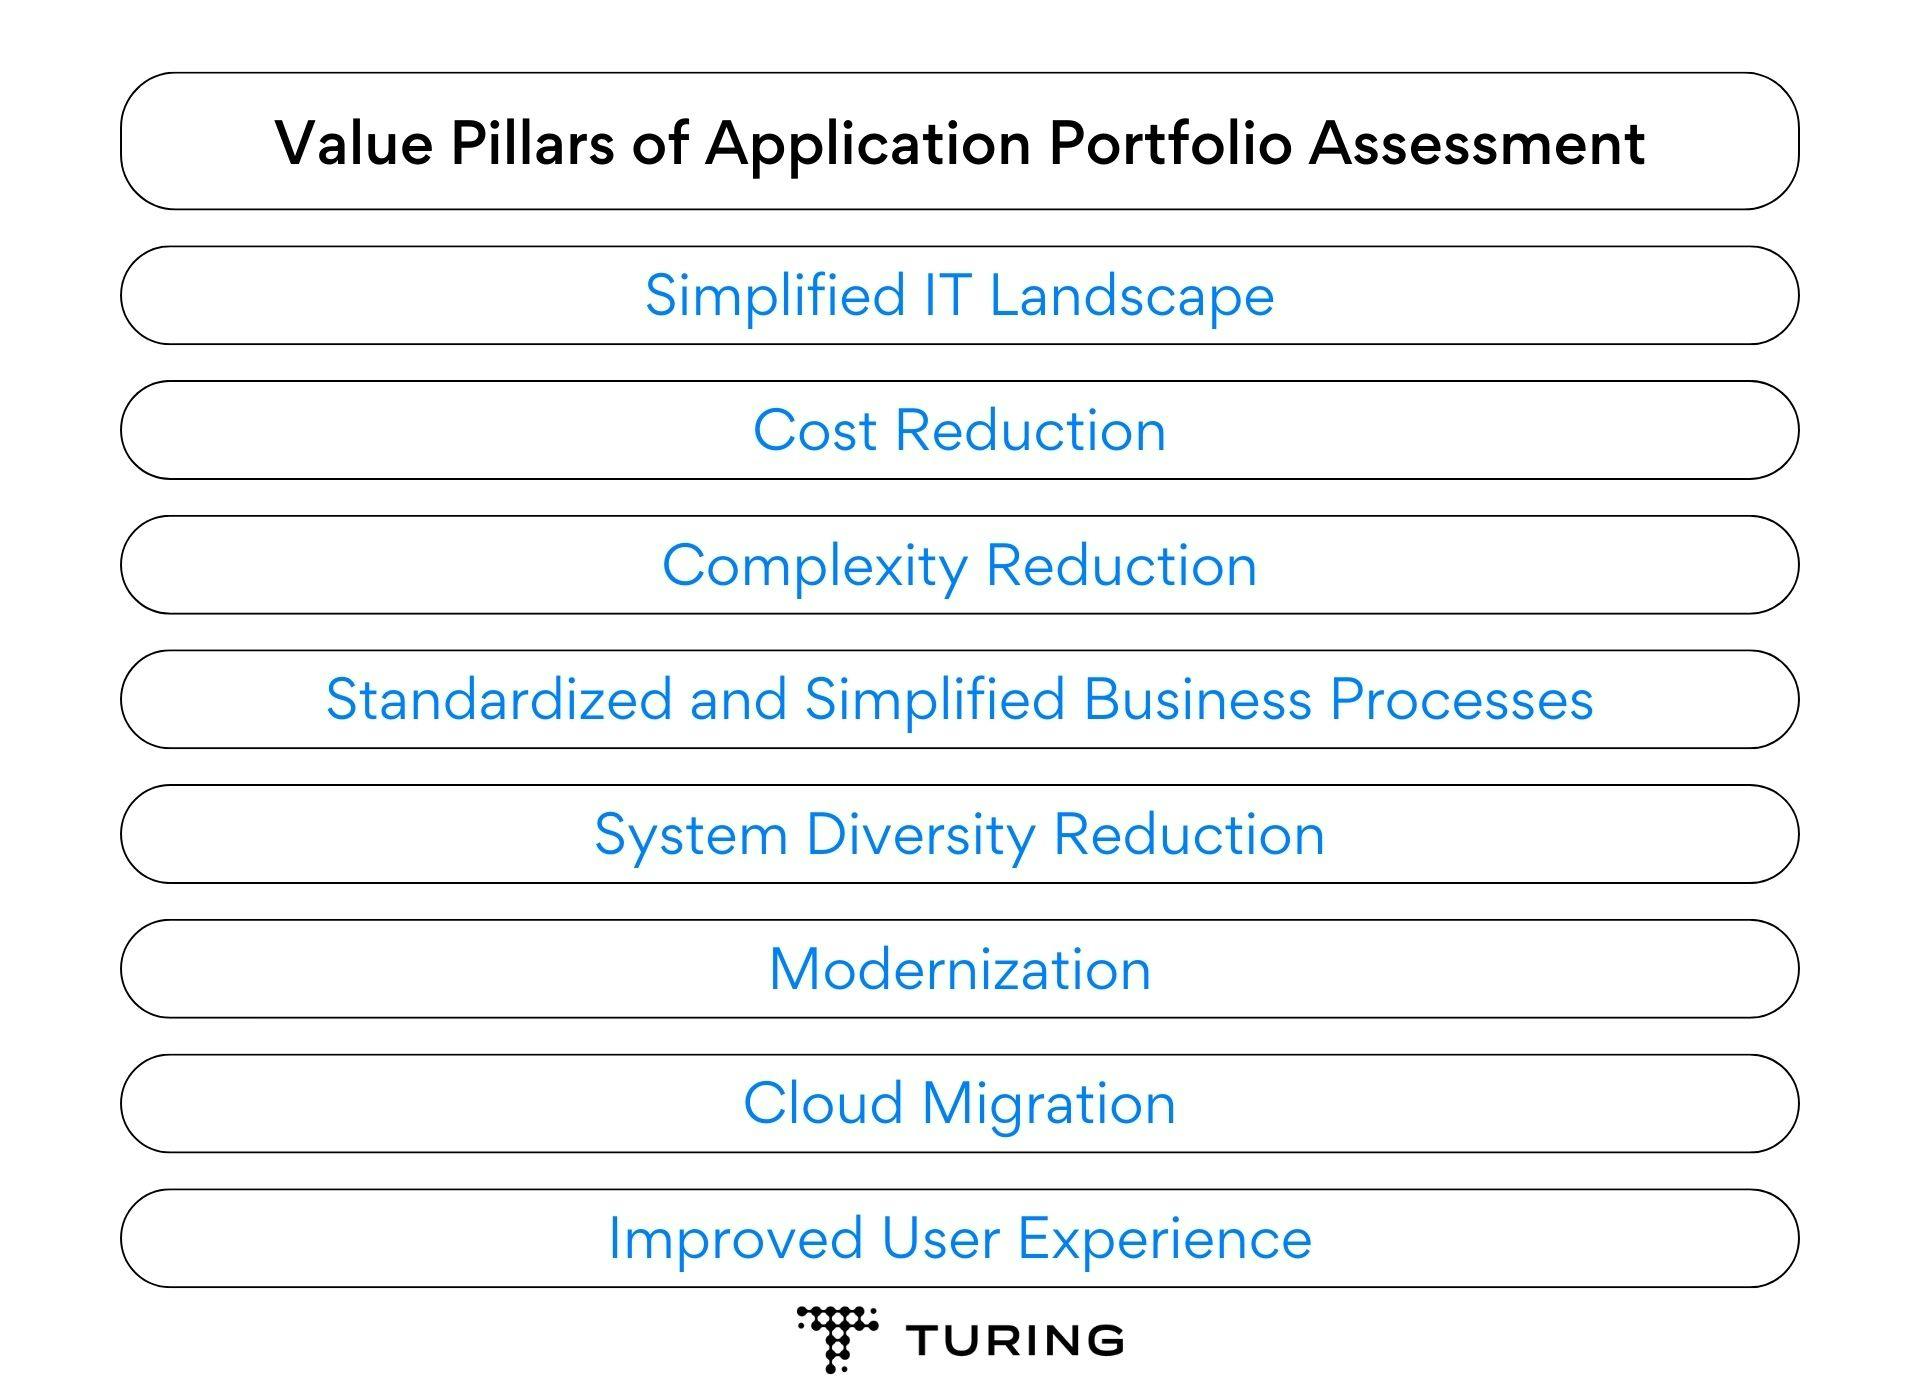 Value Pillars of Application Portfolio Assessment